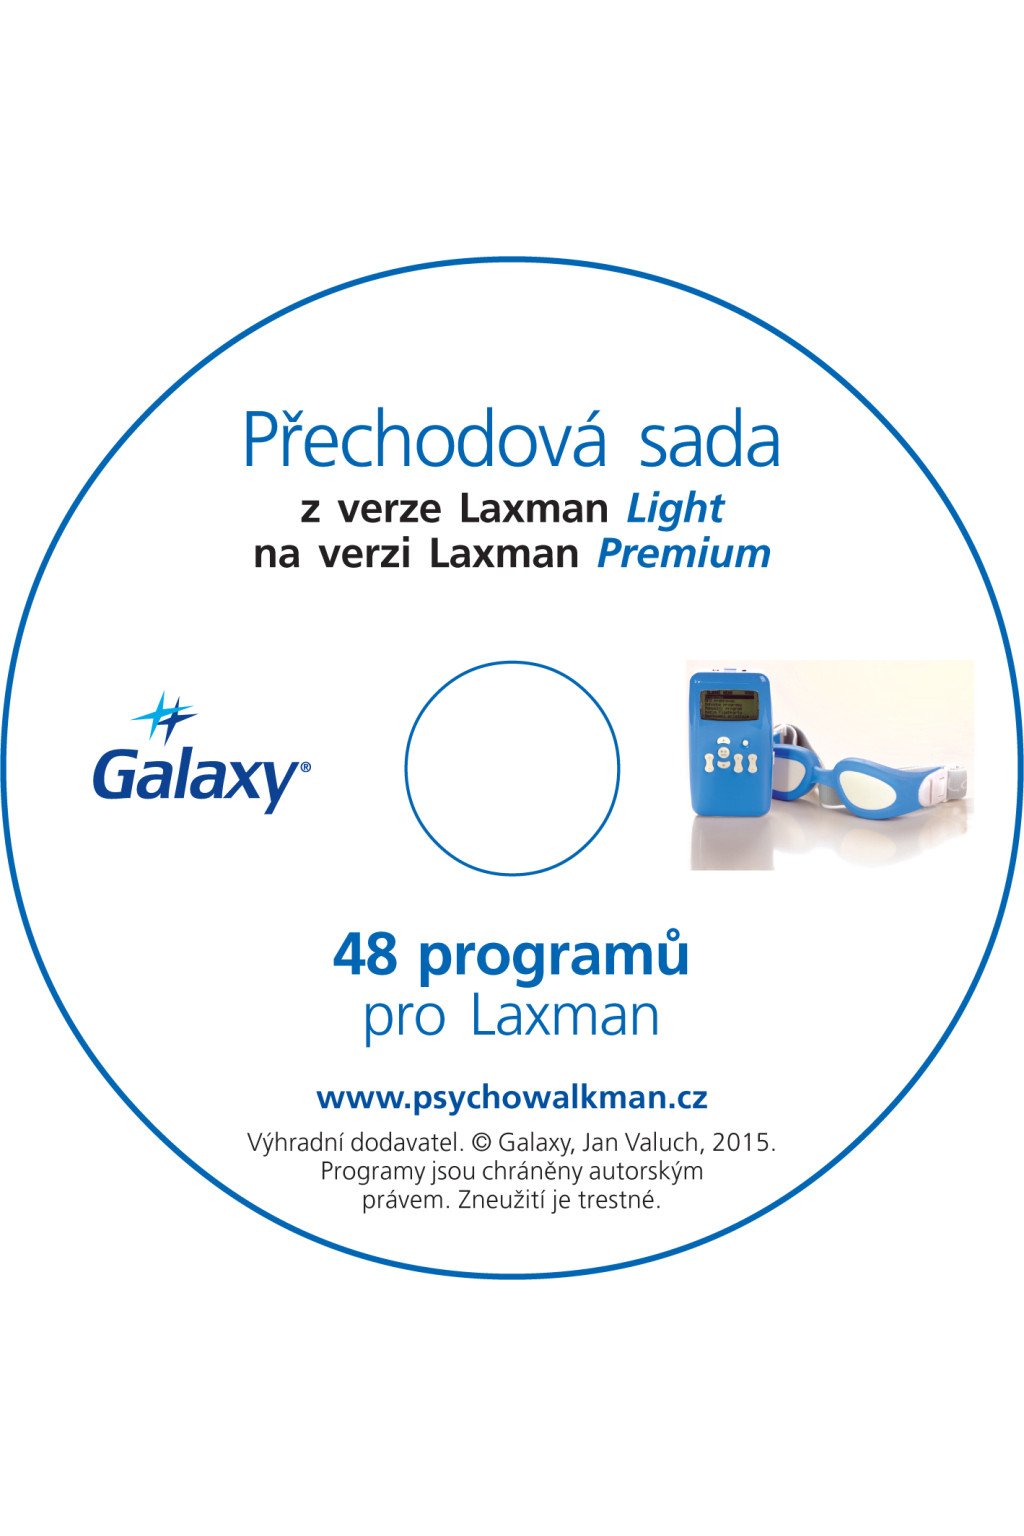 Prechodove sady laxman CD potisky 2 WEB light premium 1024x1024